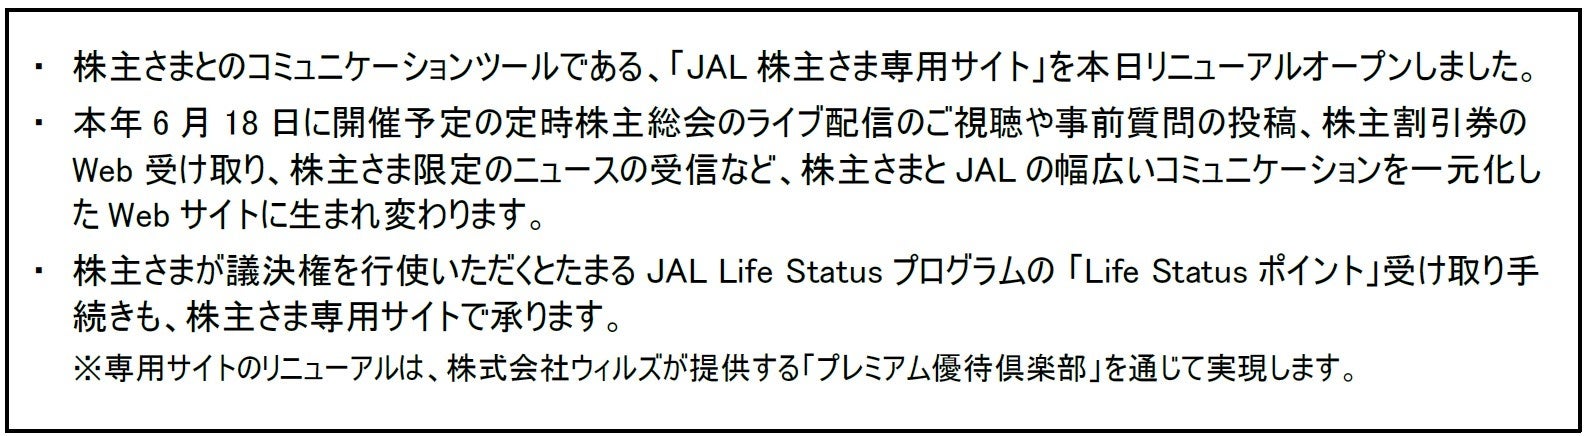 JAL株主さま専用サイトを本日リニューアルオープン